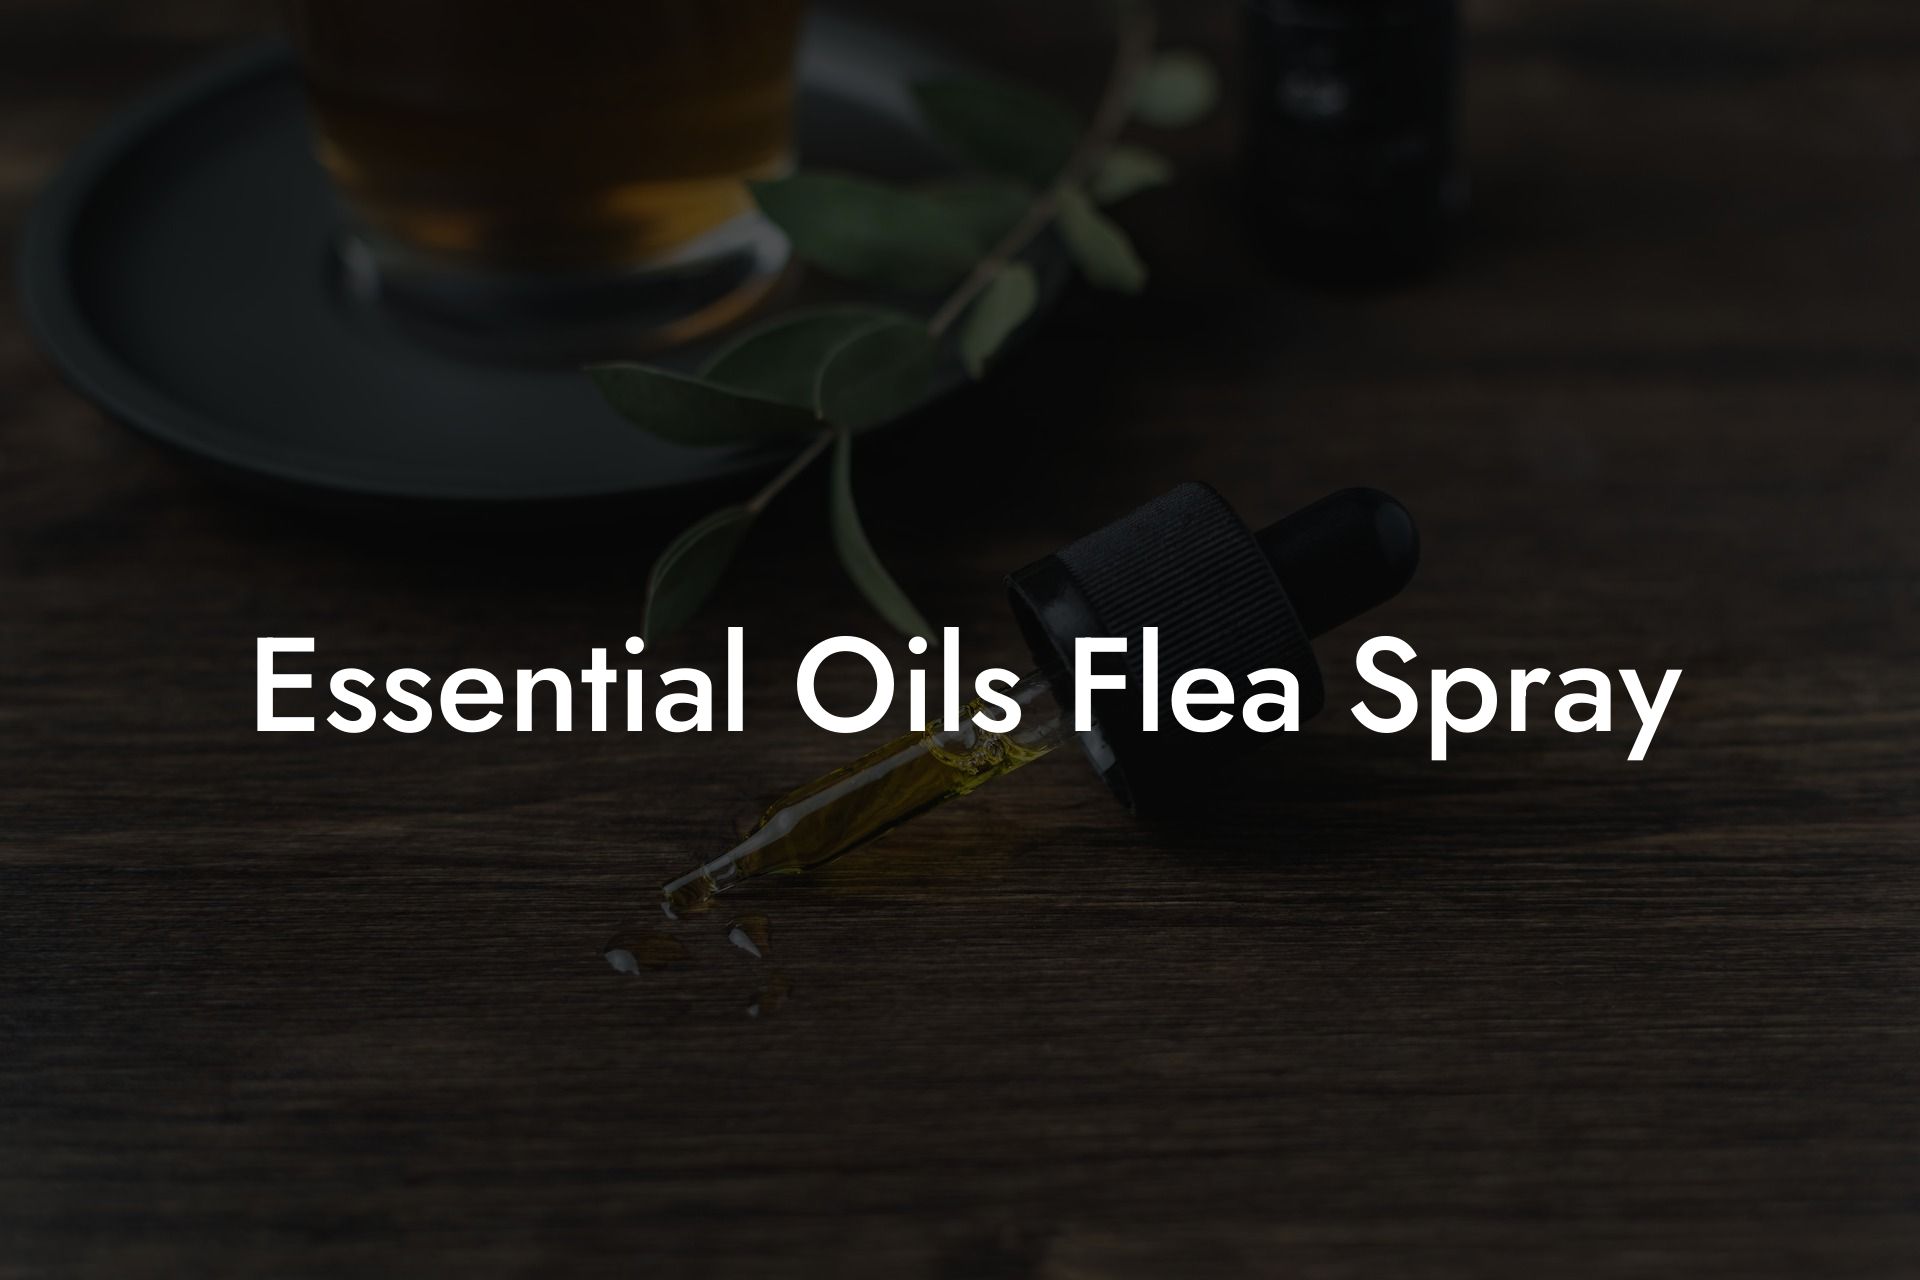 Essential Oils Flea Spray